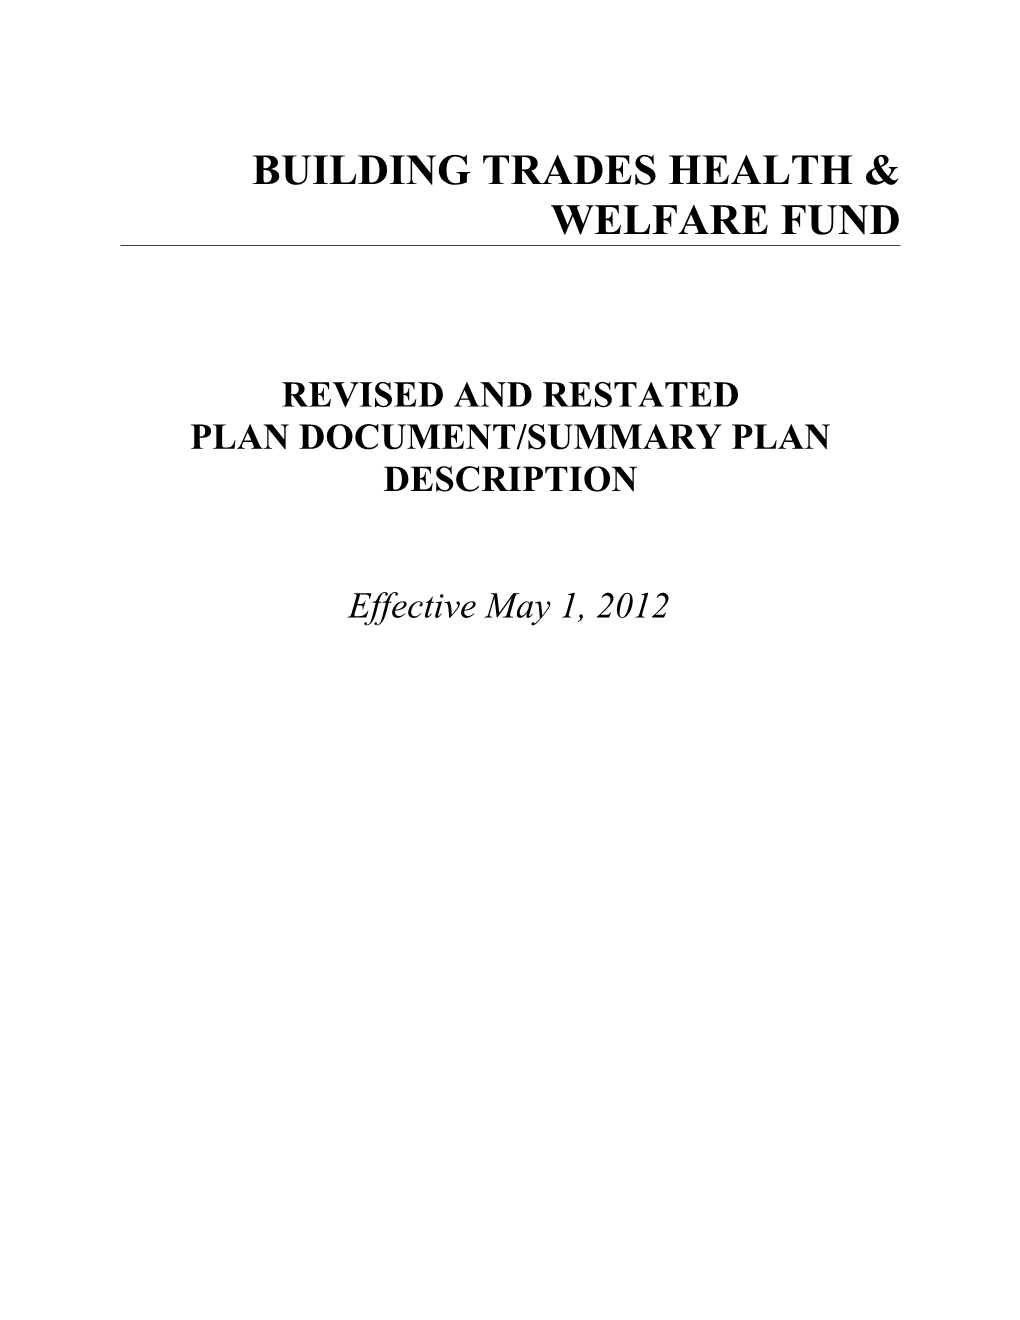 Building Trades Health & Welfare Fund